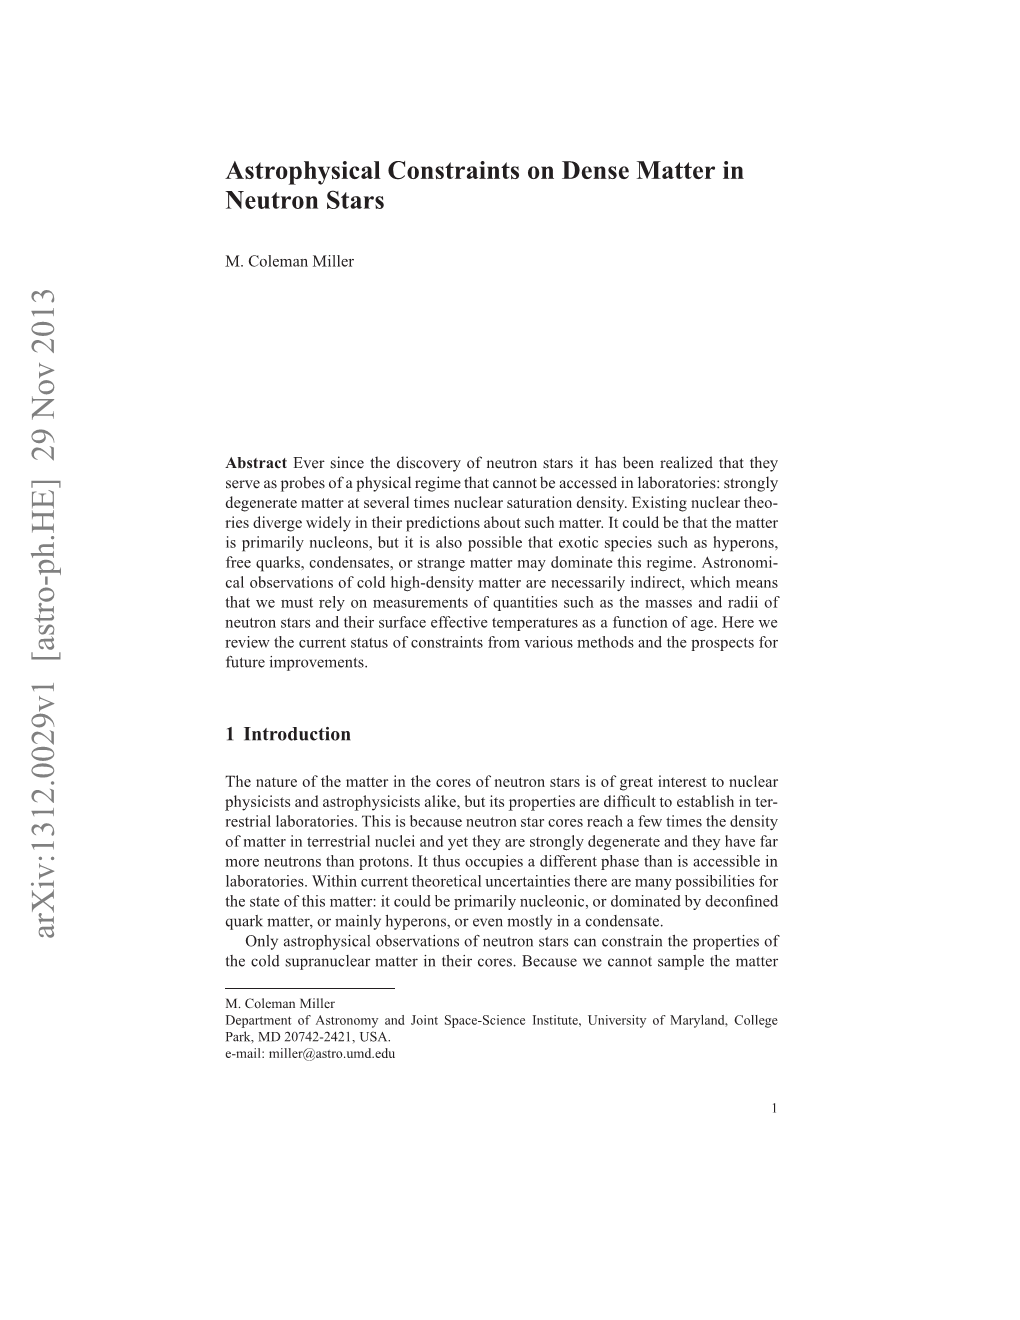 Astrophysical Constraints on Dense Matter in Neutron Stars